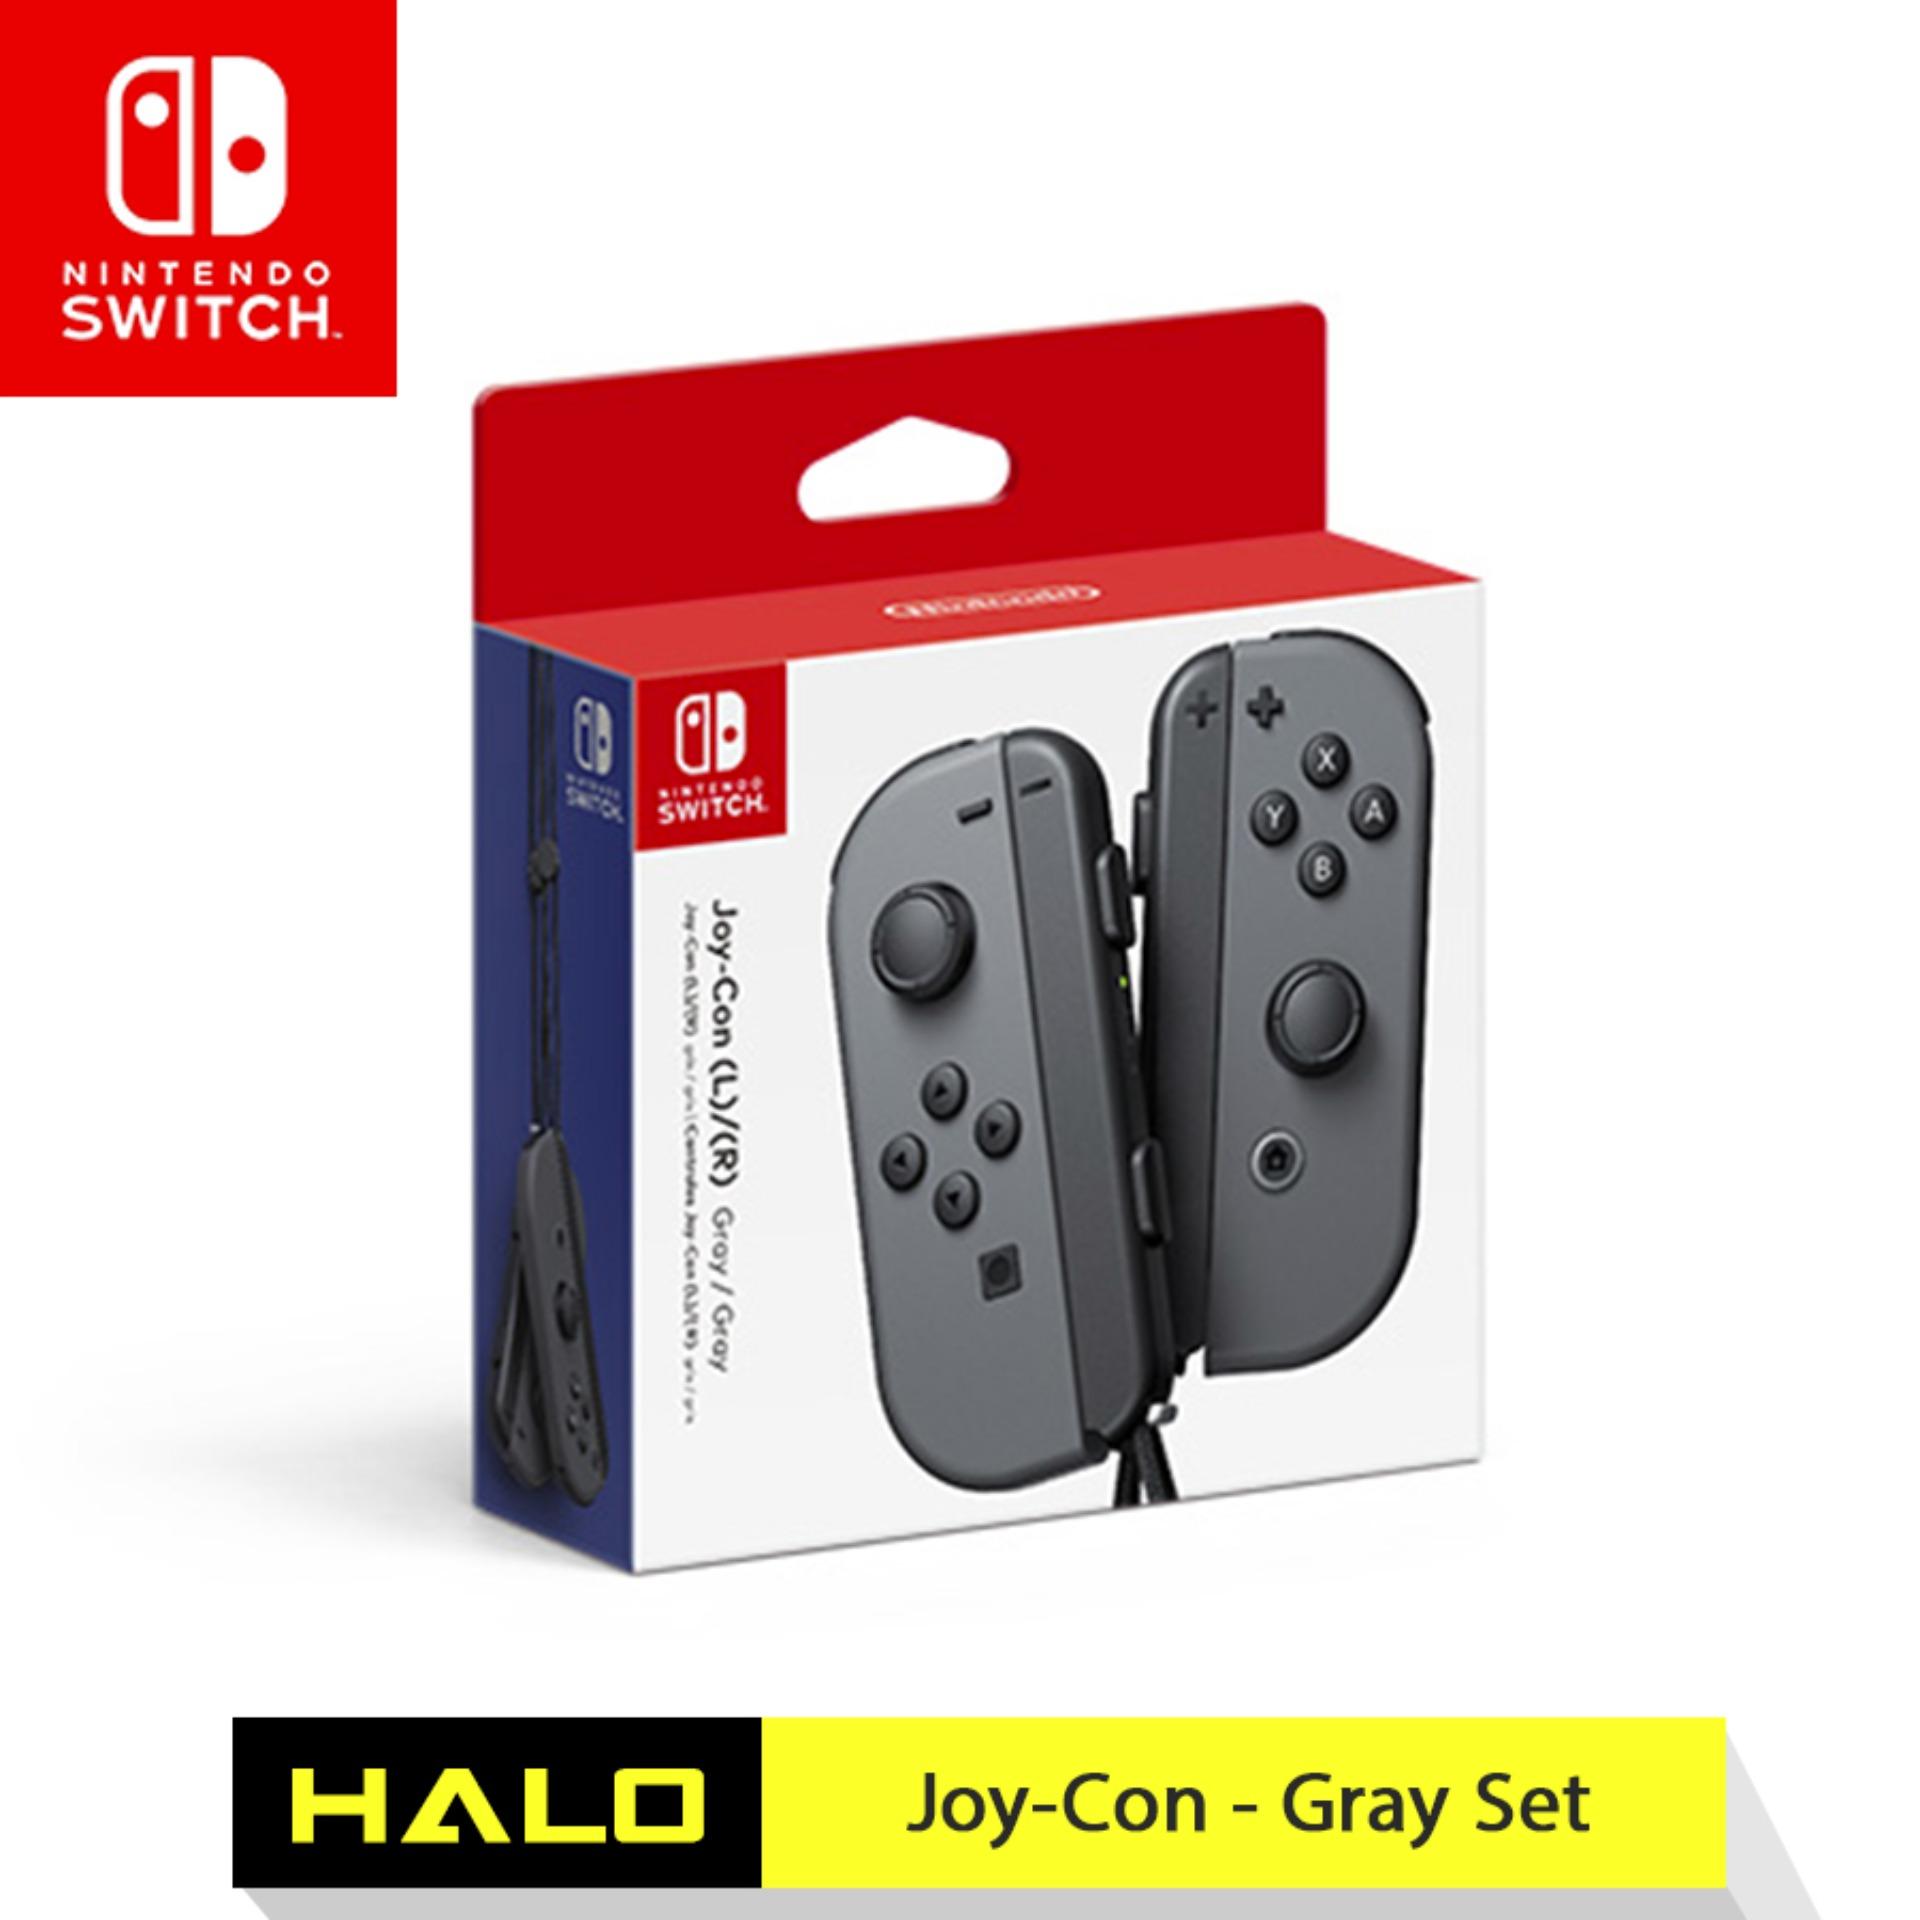 Tay Cầm Joy-Con cho Nintendo Switch - Gray Set